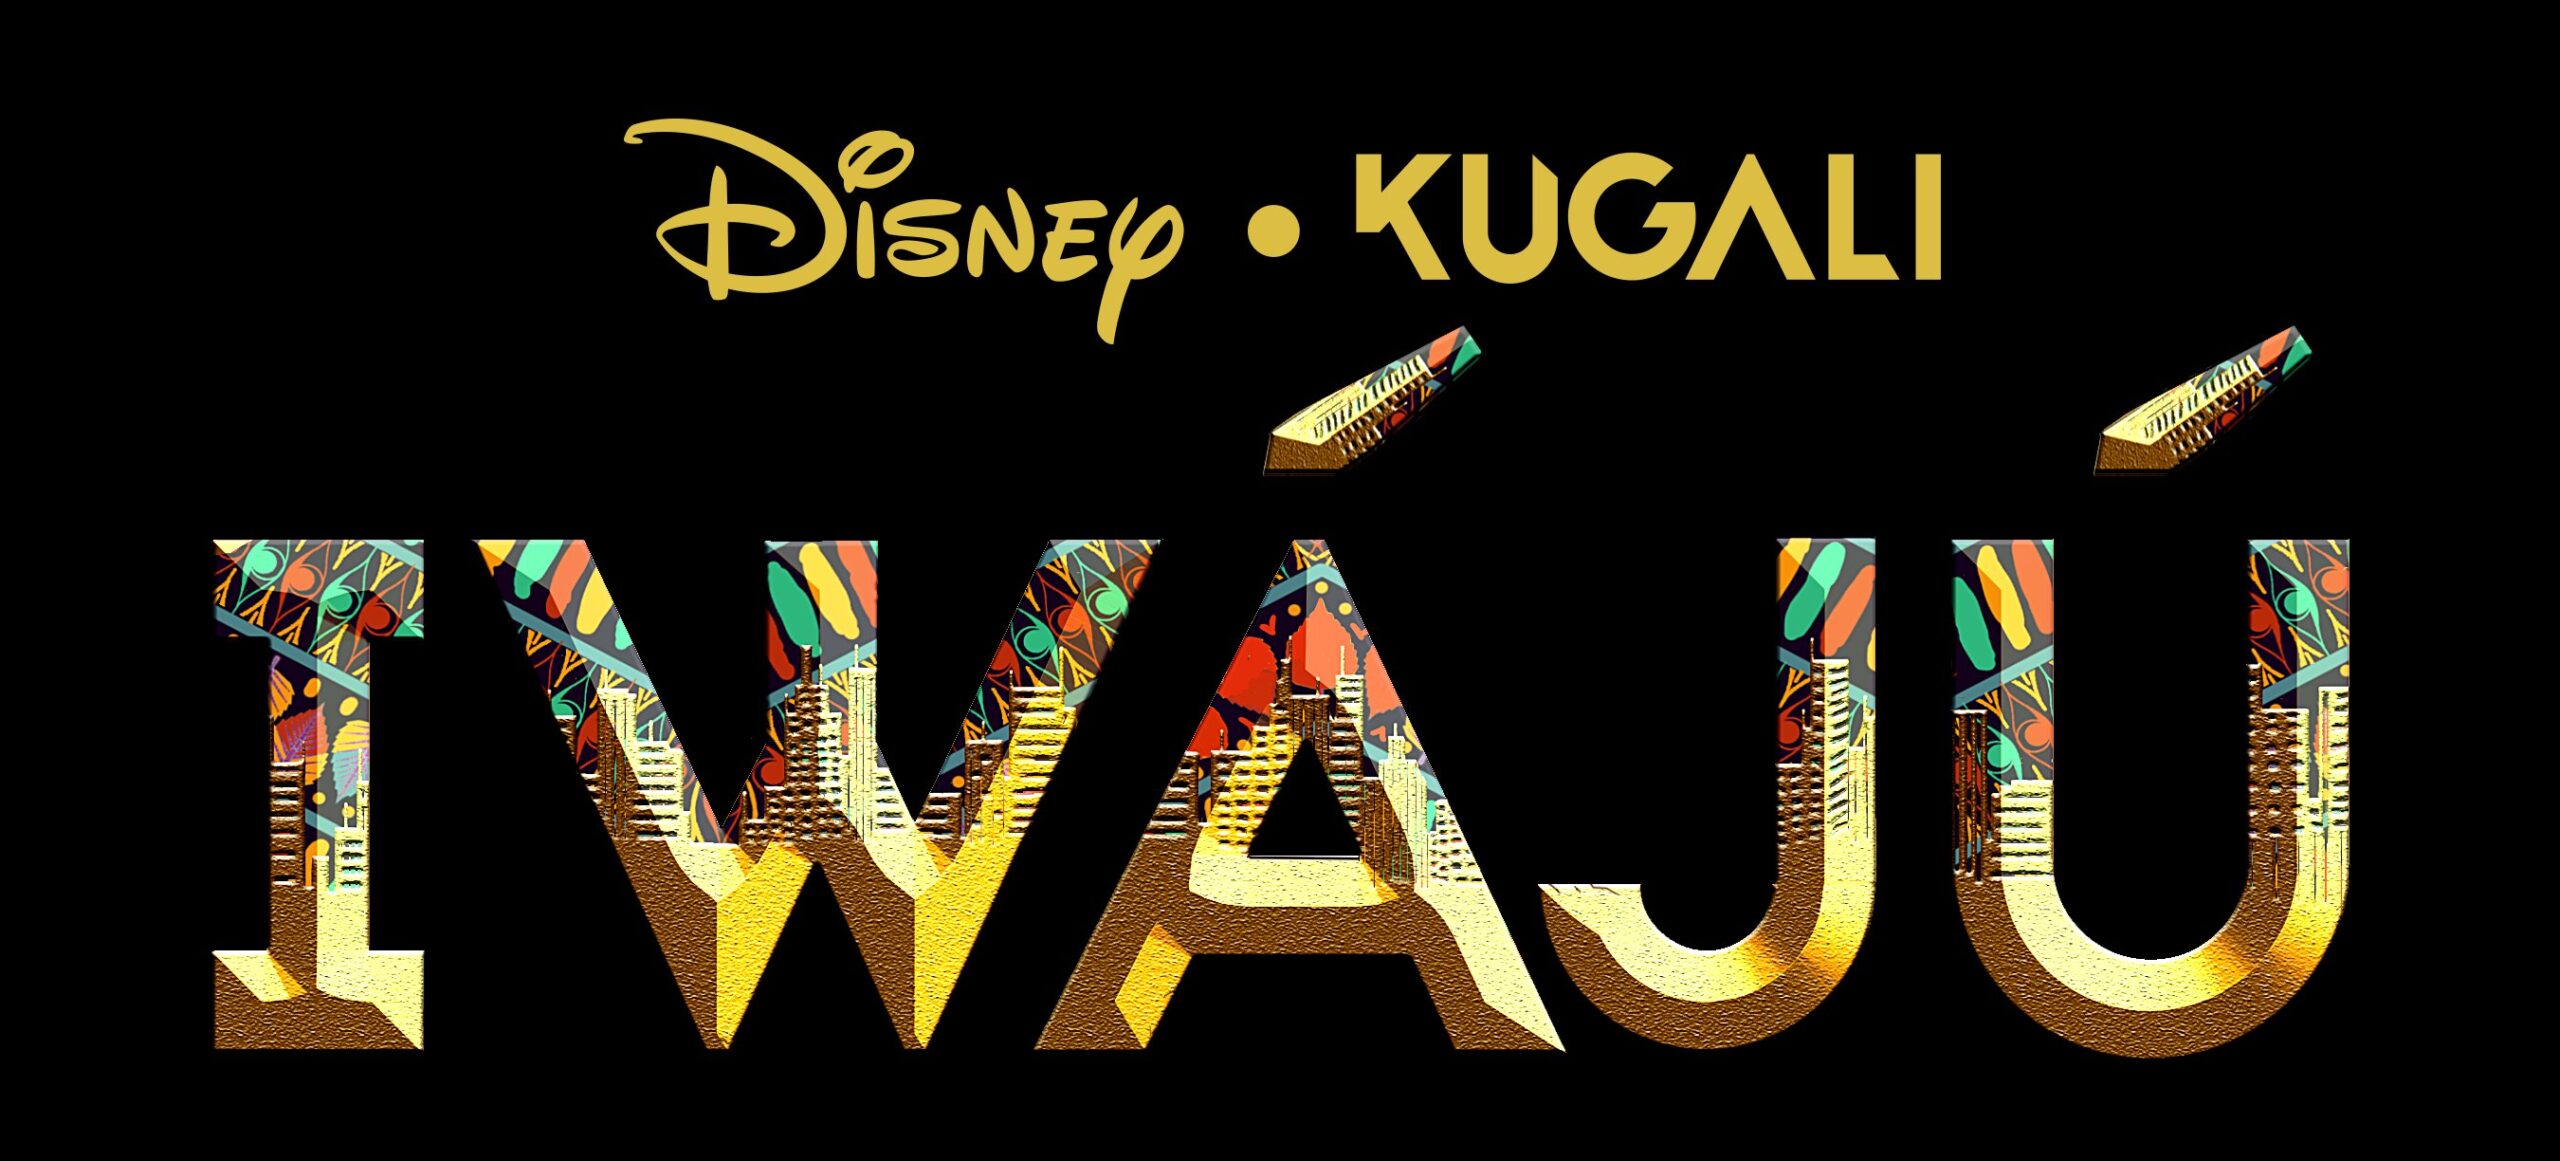 iwaju logo scaled - "Iwaju" Sci - Fi Series Developed by Kugali to debut on Disney Plus